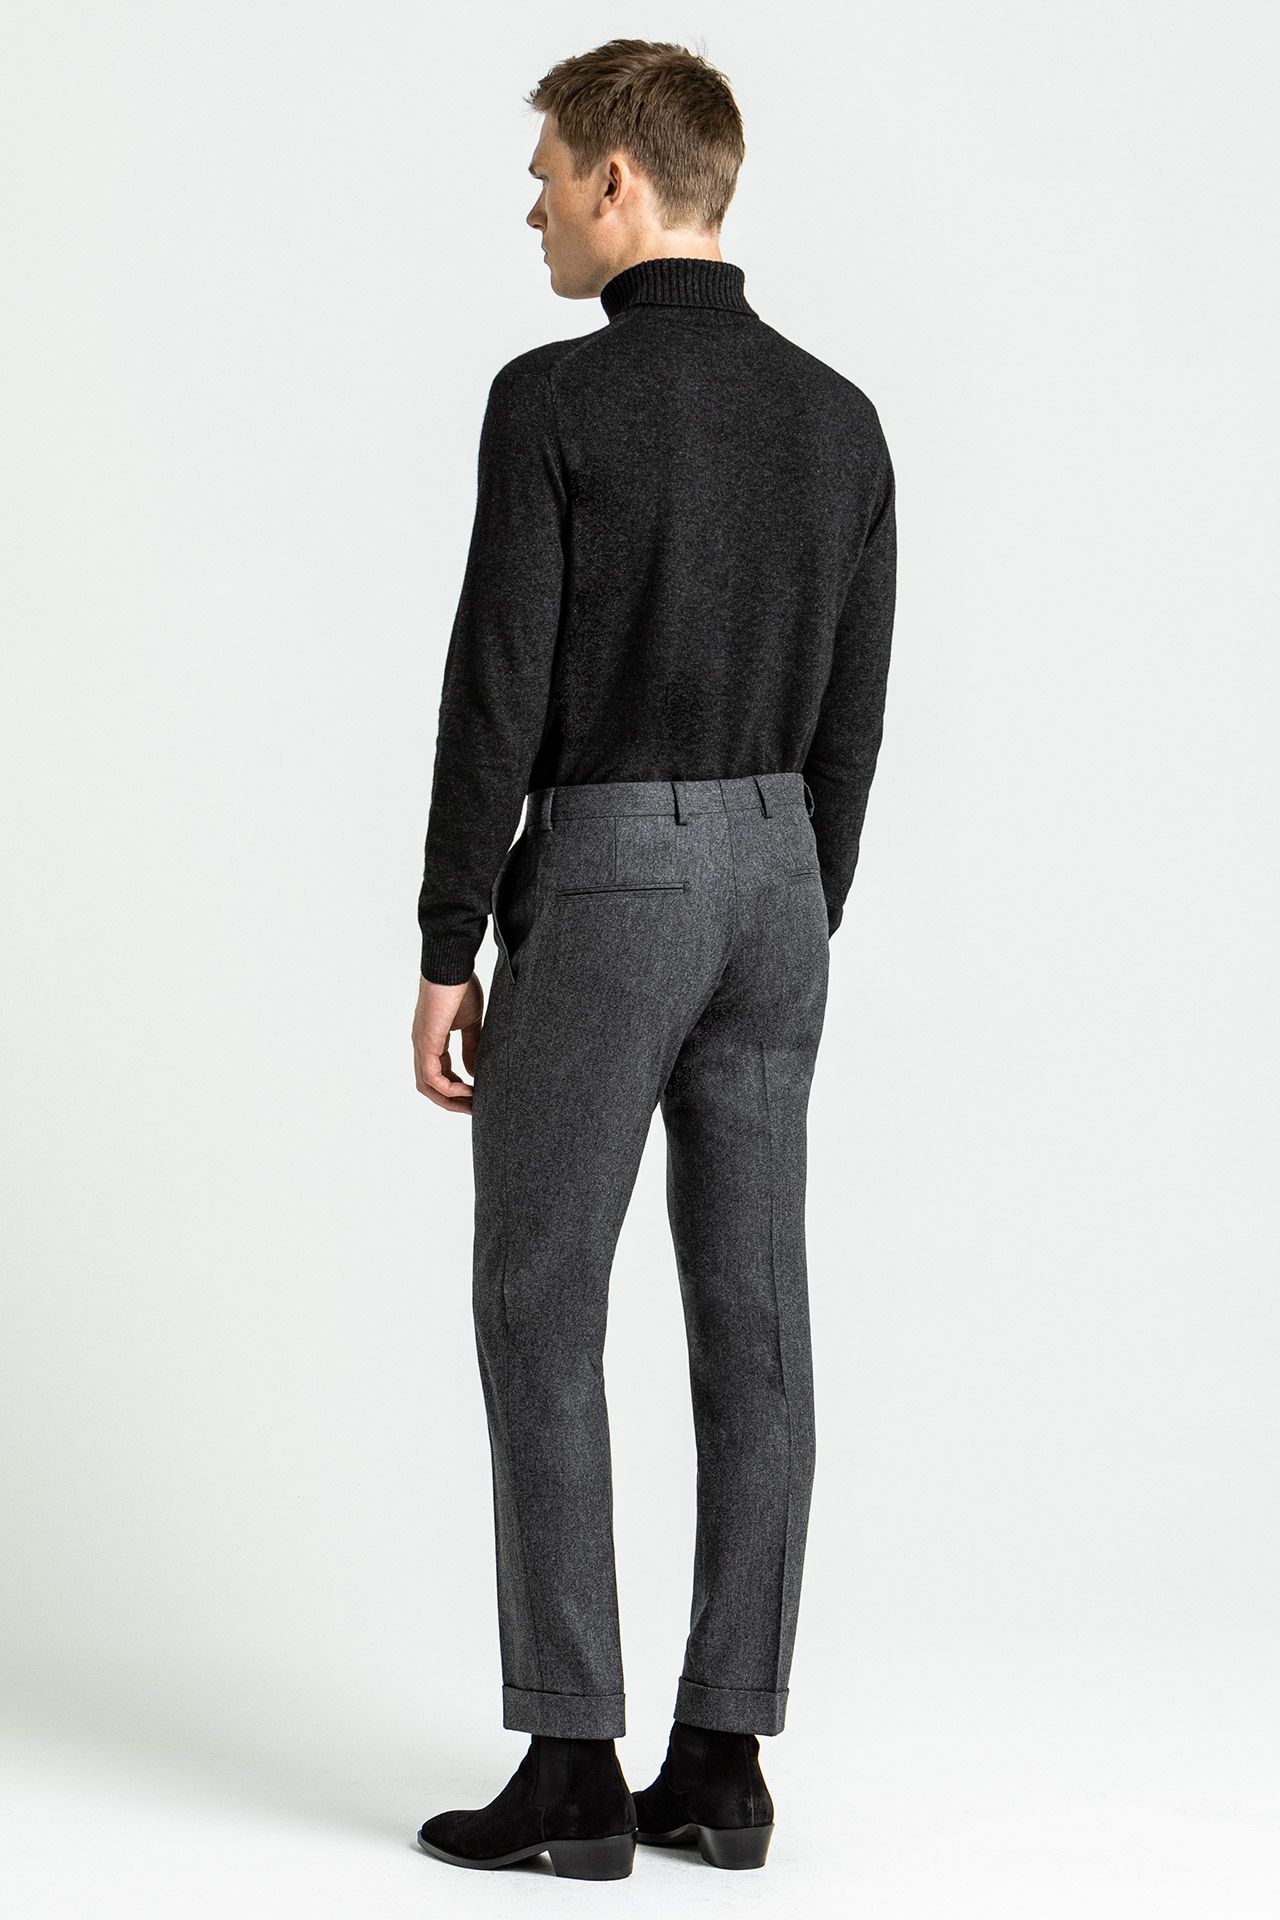 Trousers bespoke tailored for men. — De Oost Bespoke Tailoring